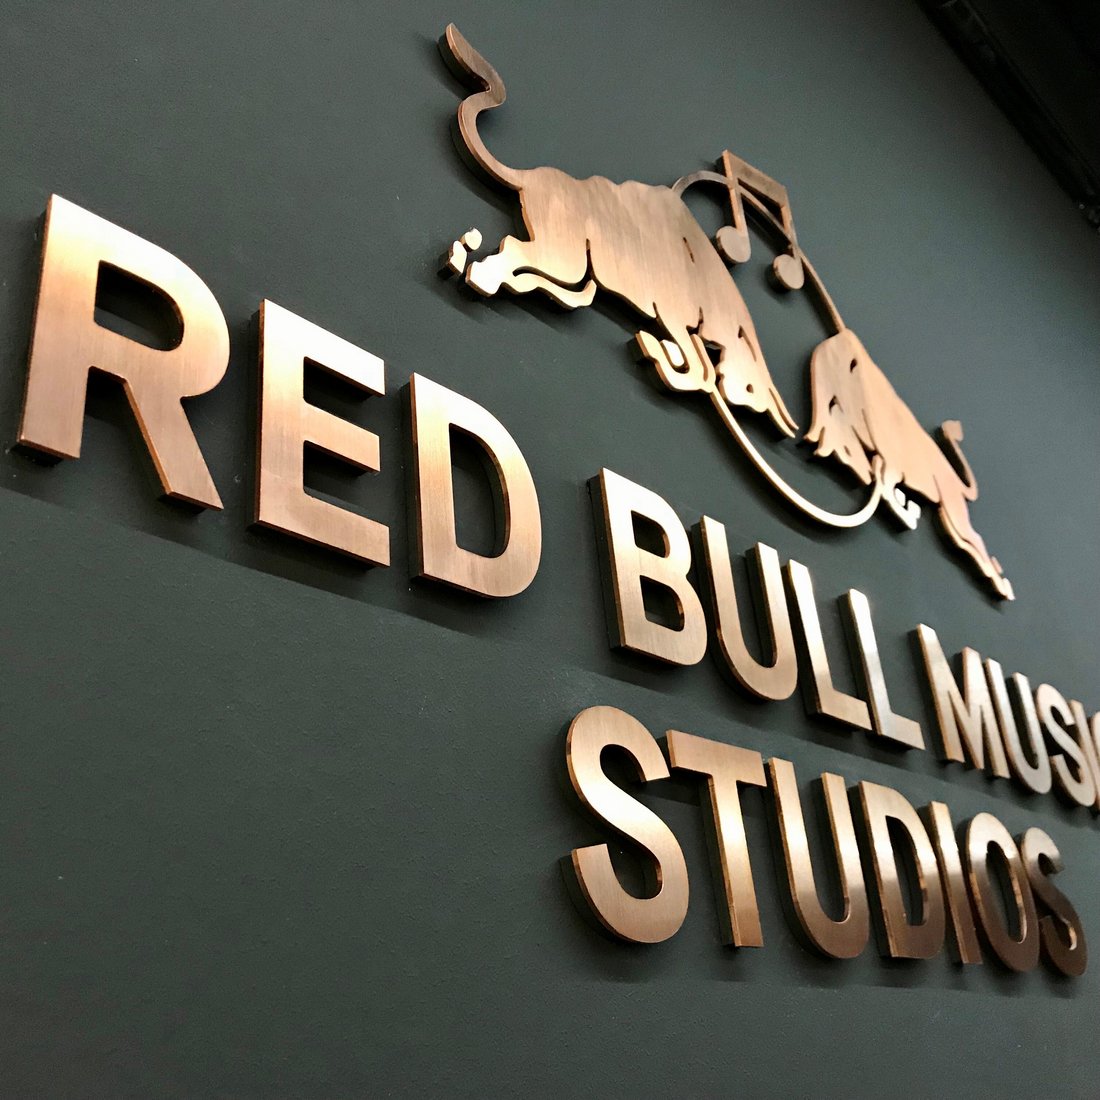 Red Bull Studio Werbeanlage